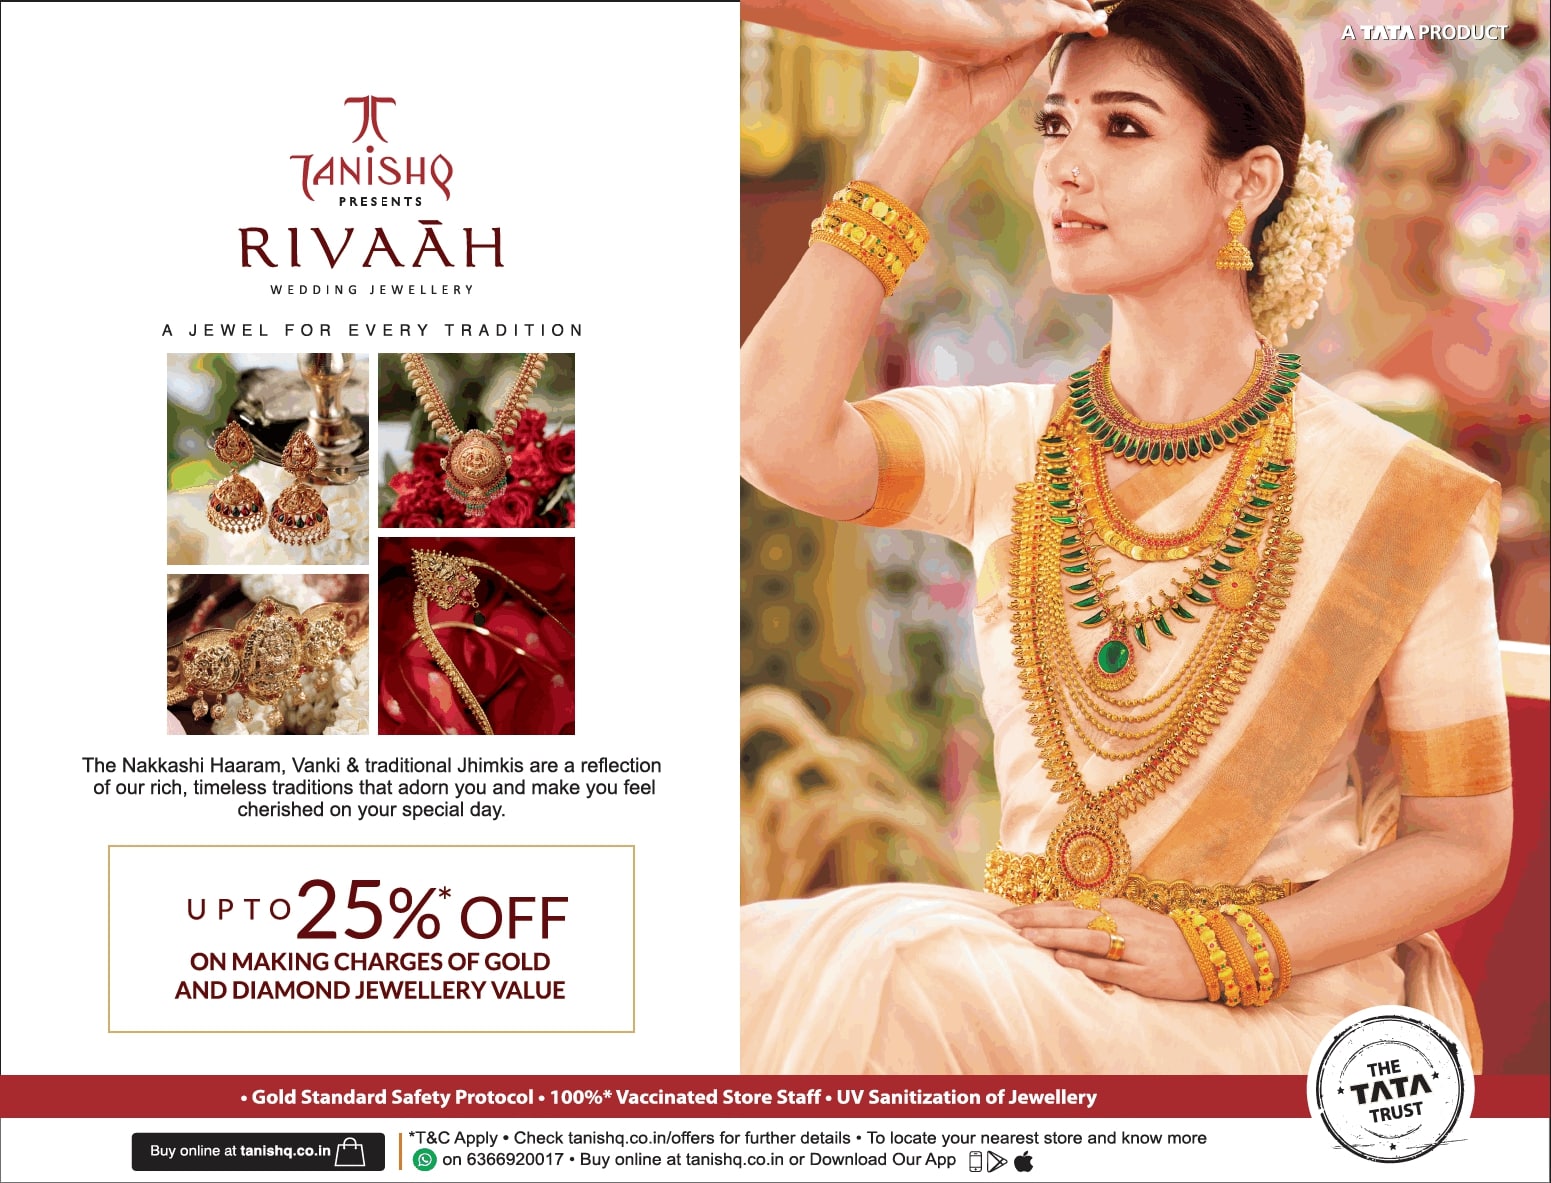 tanishq-rivaah-malayalee-wedding-jewellery-the-nakkashi-haaram-vank-and-traditional-jhimkis-ad-toi-kochi-1-7-2021